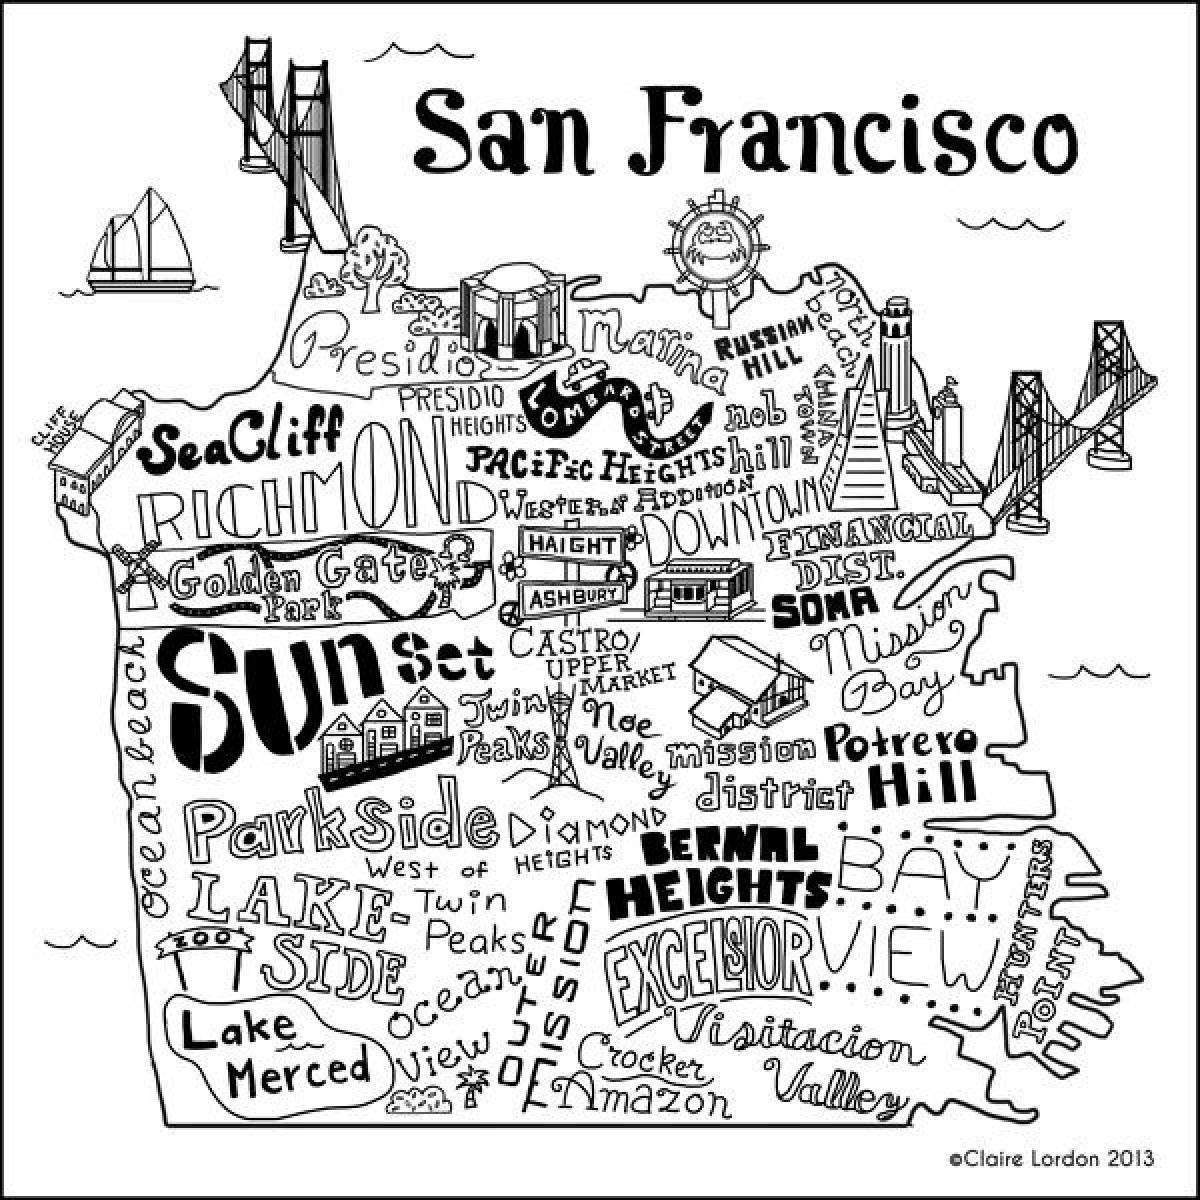 Peta dari toko San Francisco